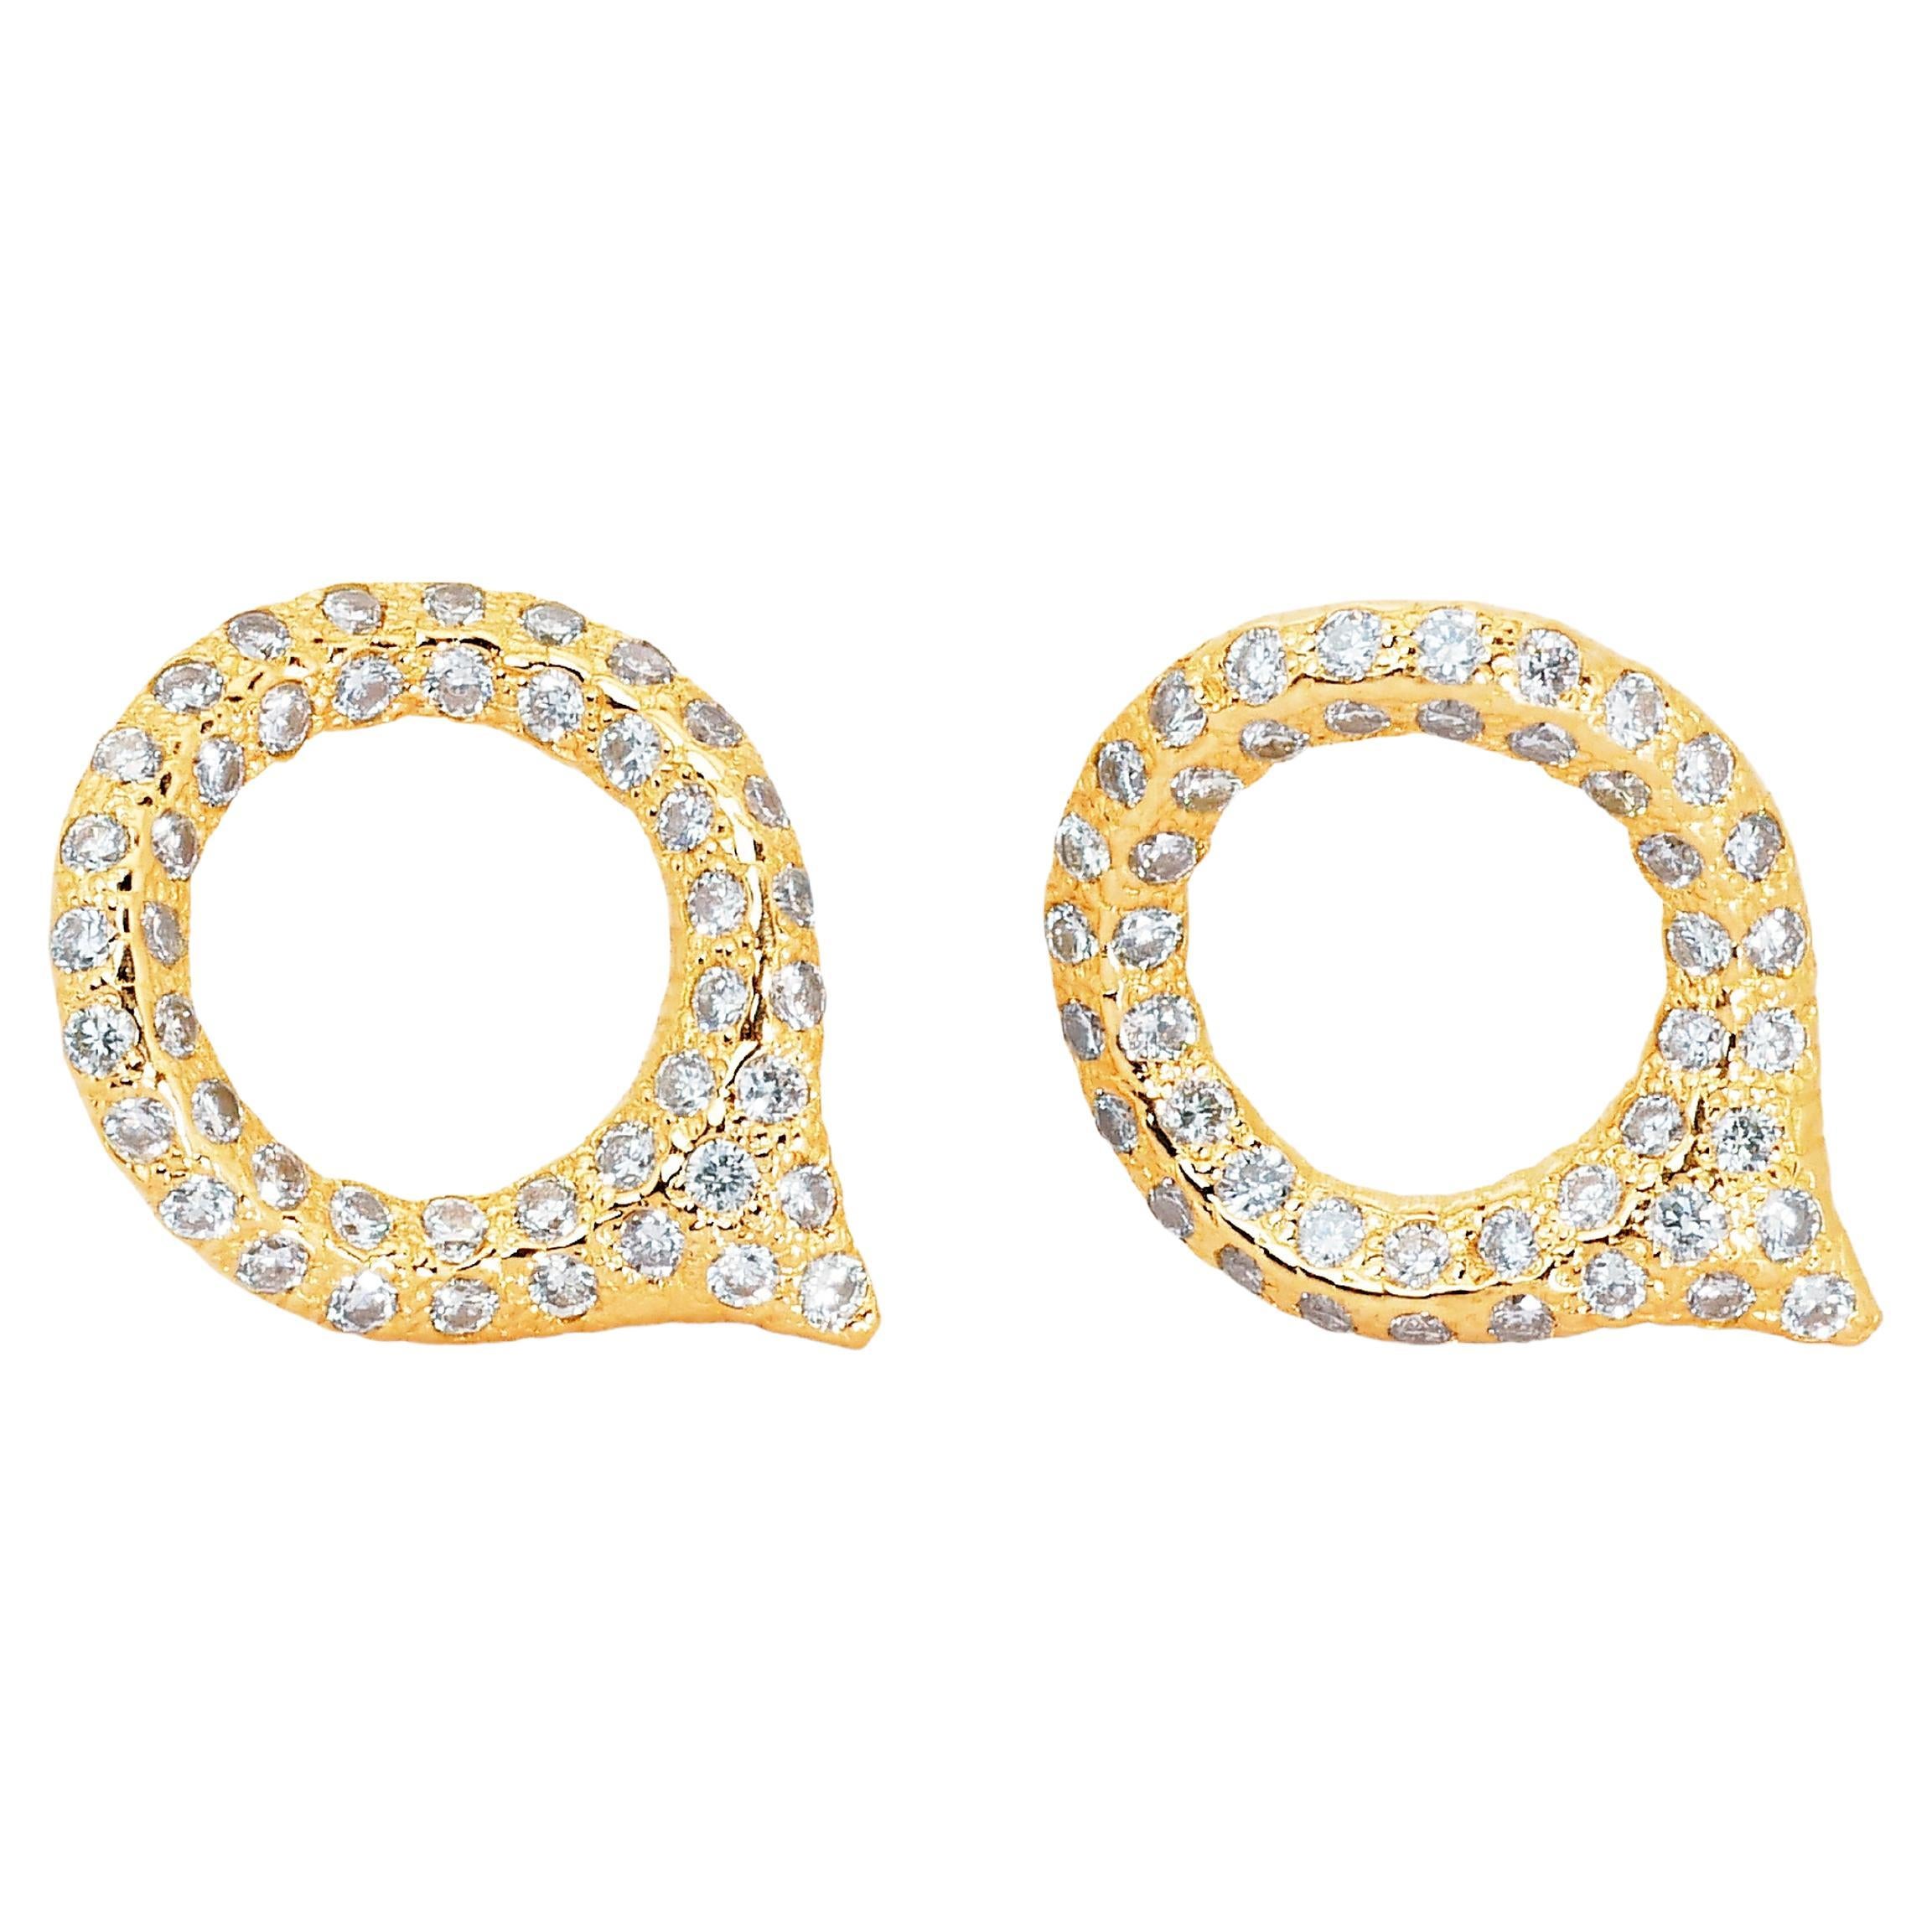 Glamorous 18k Yellow Gold Earrings w/ 1.28ct Natural Diamonds IGI Certificate For Sale